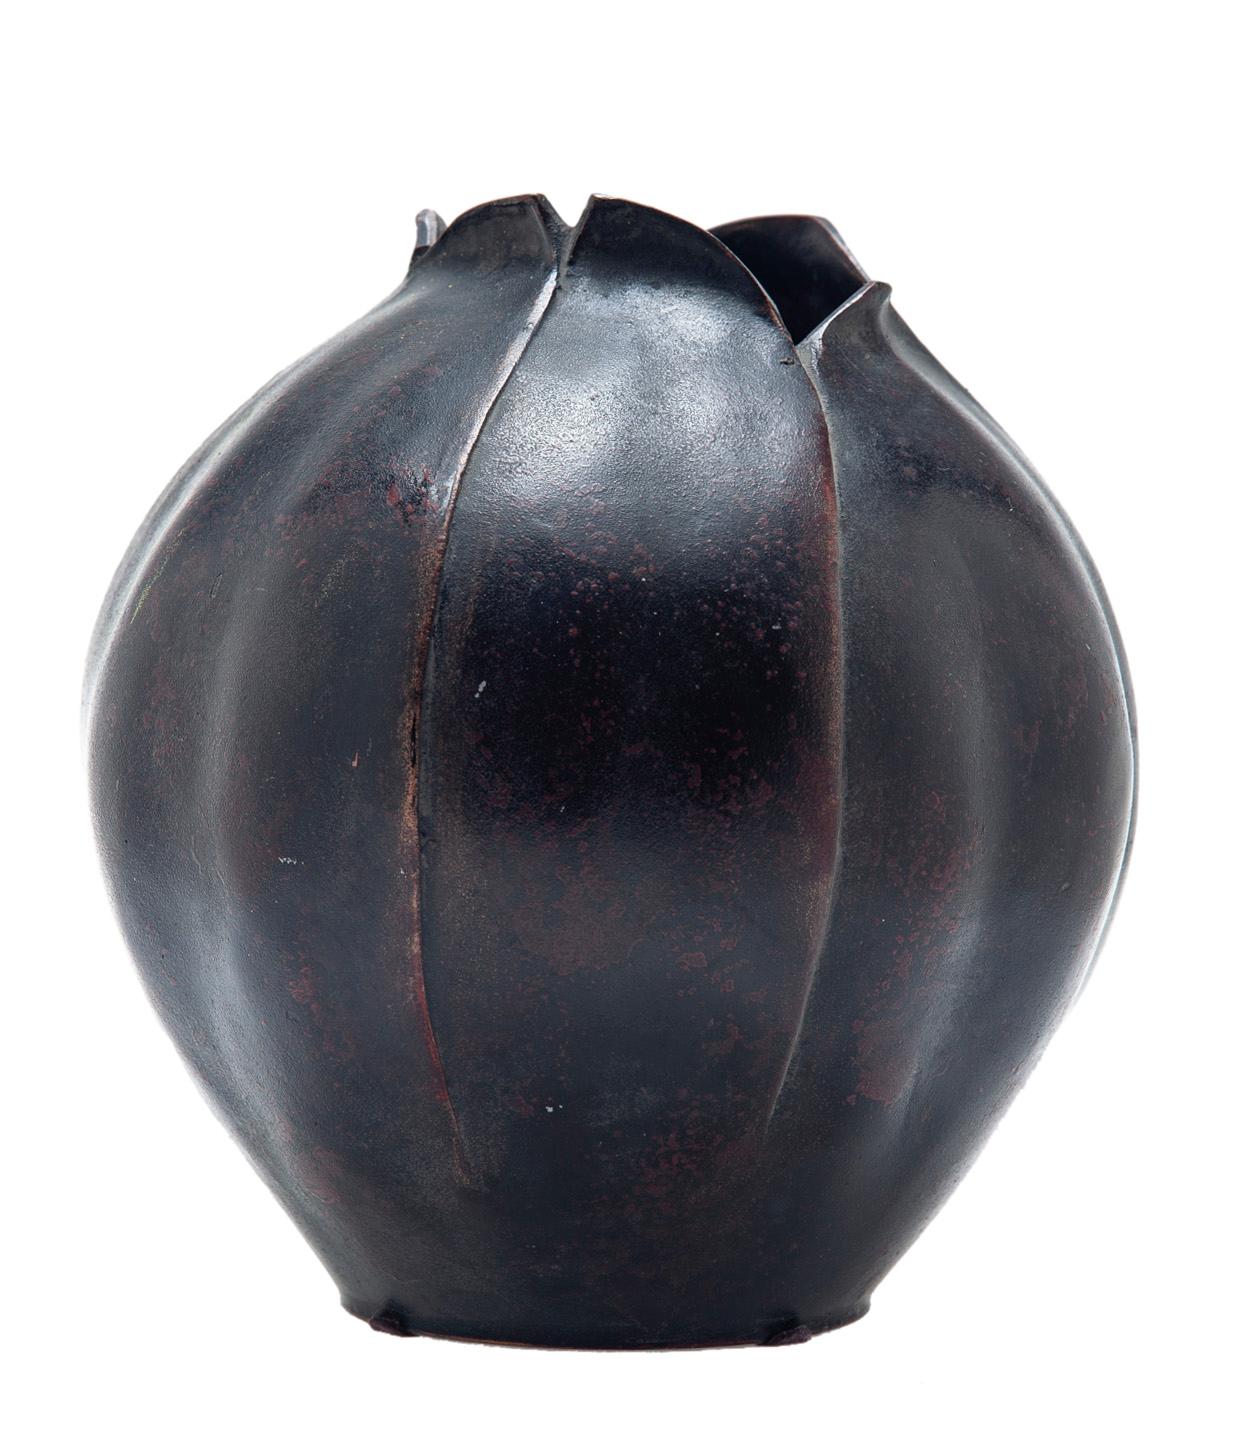 20th Century Japanese Lotus-Form Vase